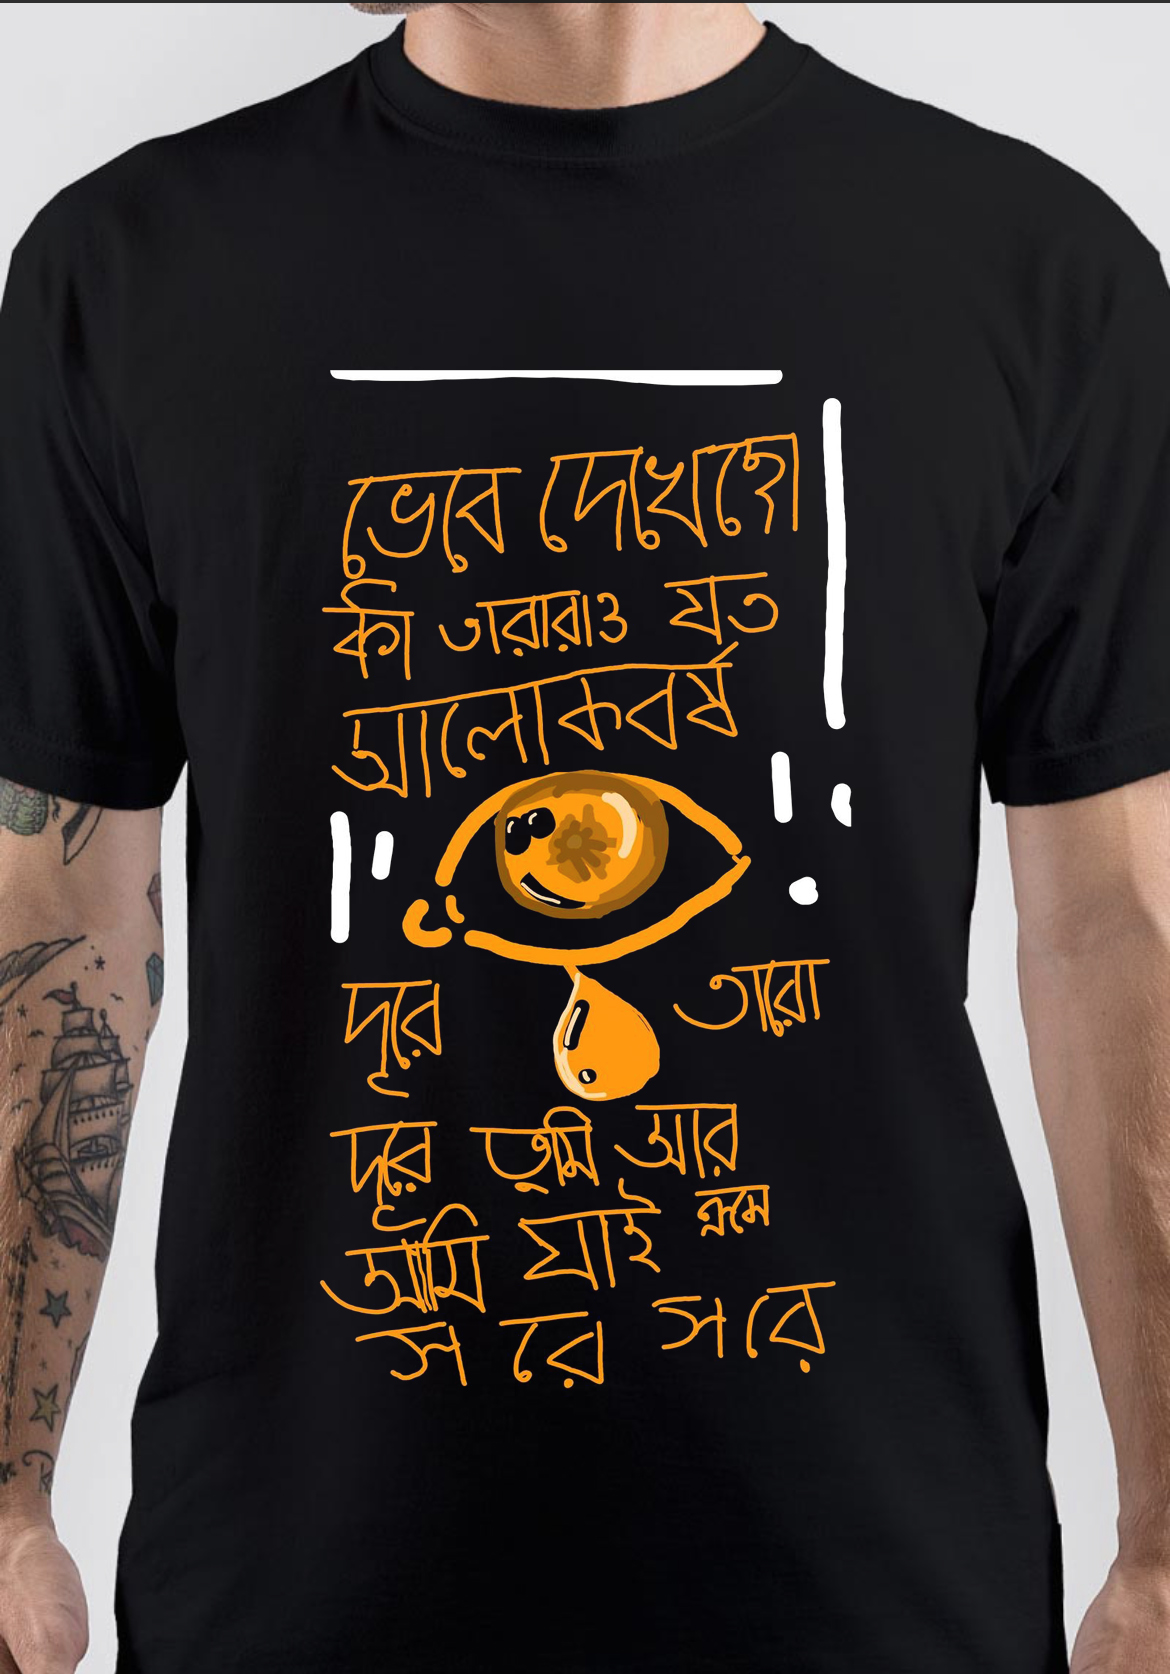 Moheener Ghoraguli T-Shirt And Merchandise